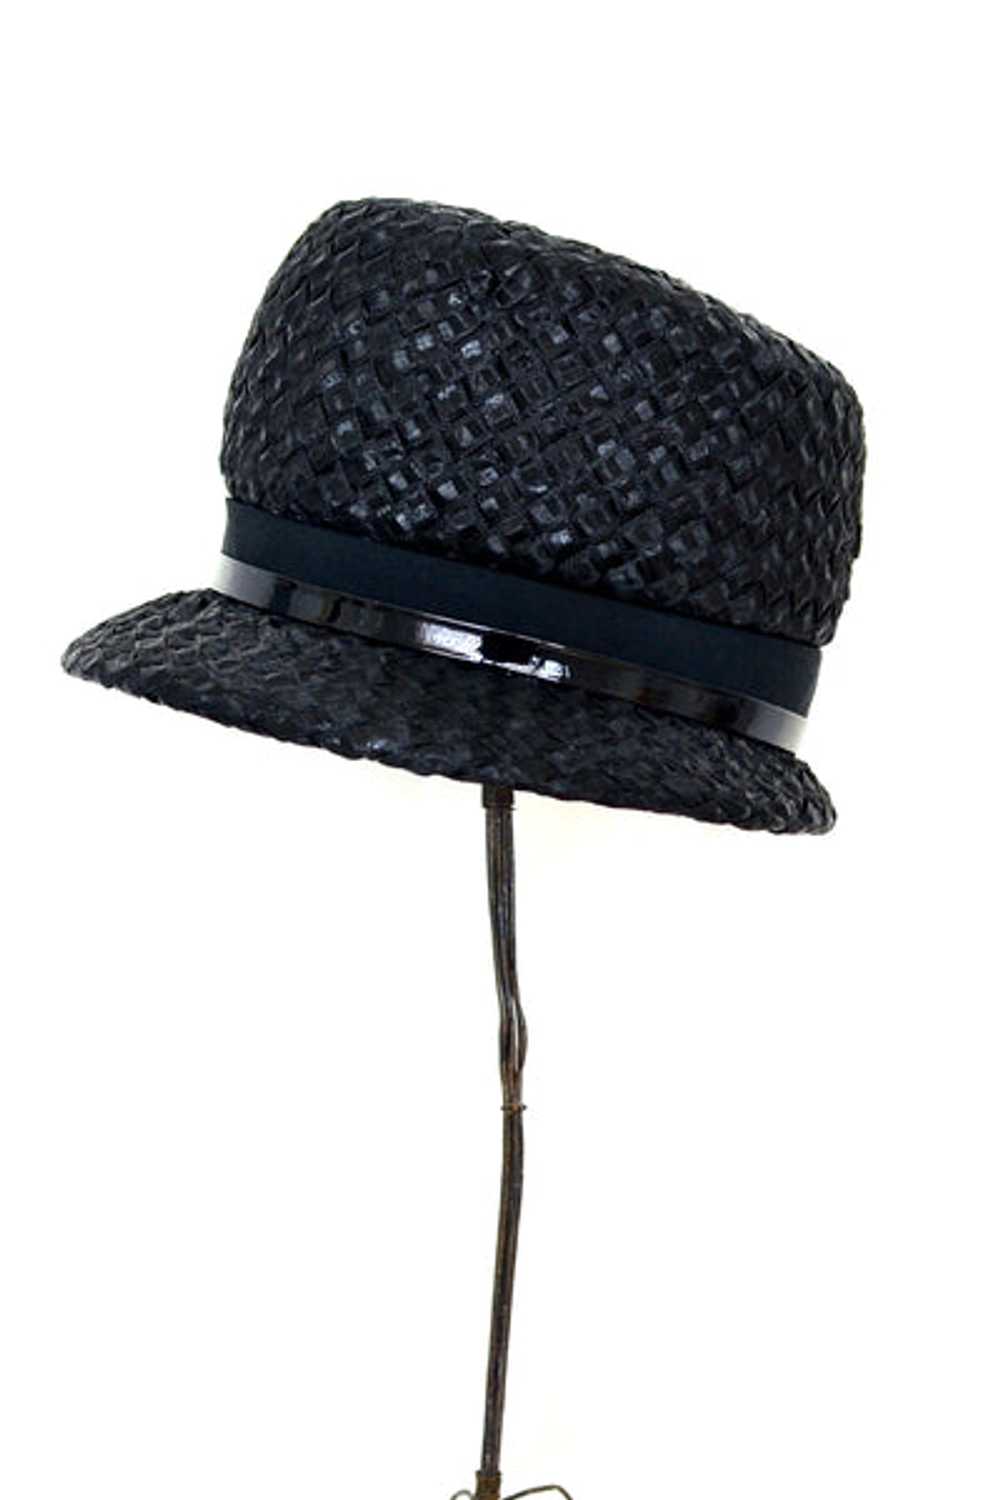 Black Straw Hat - image 3